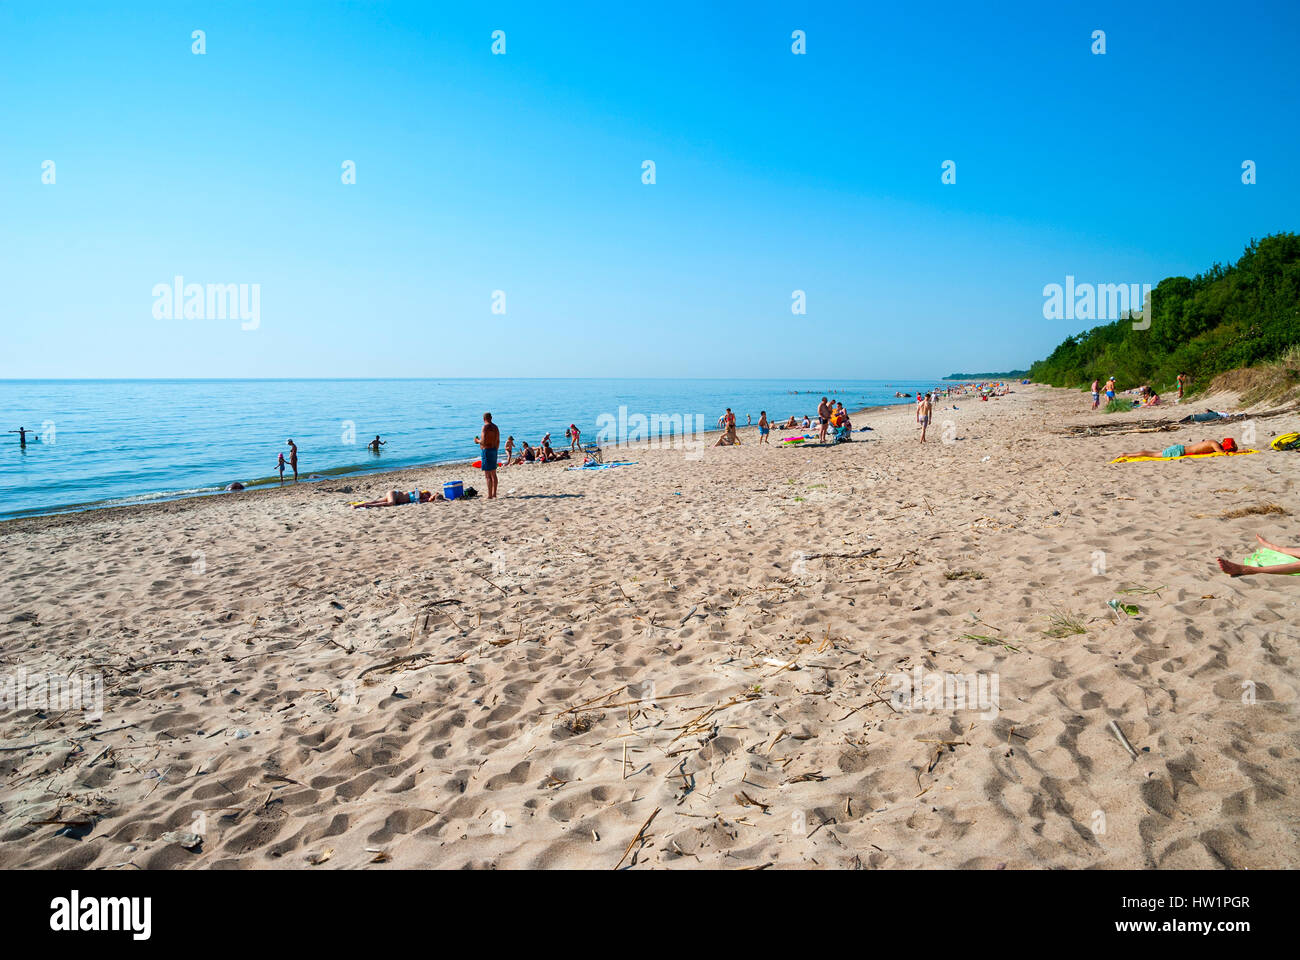 KLAIPEDA, LITHUANIA - JULY 4: People on sandy beach in Klaipeda under sunlight. July 2016. Stock Photo